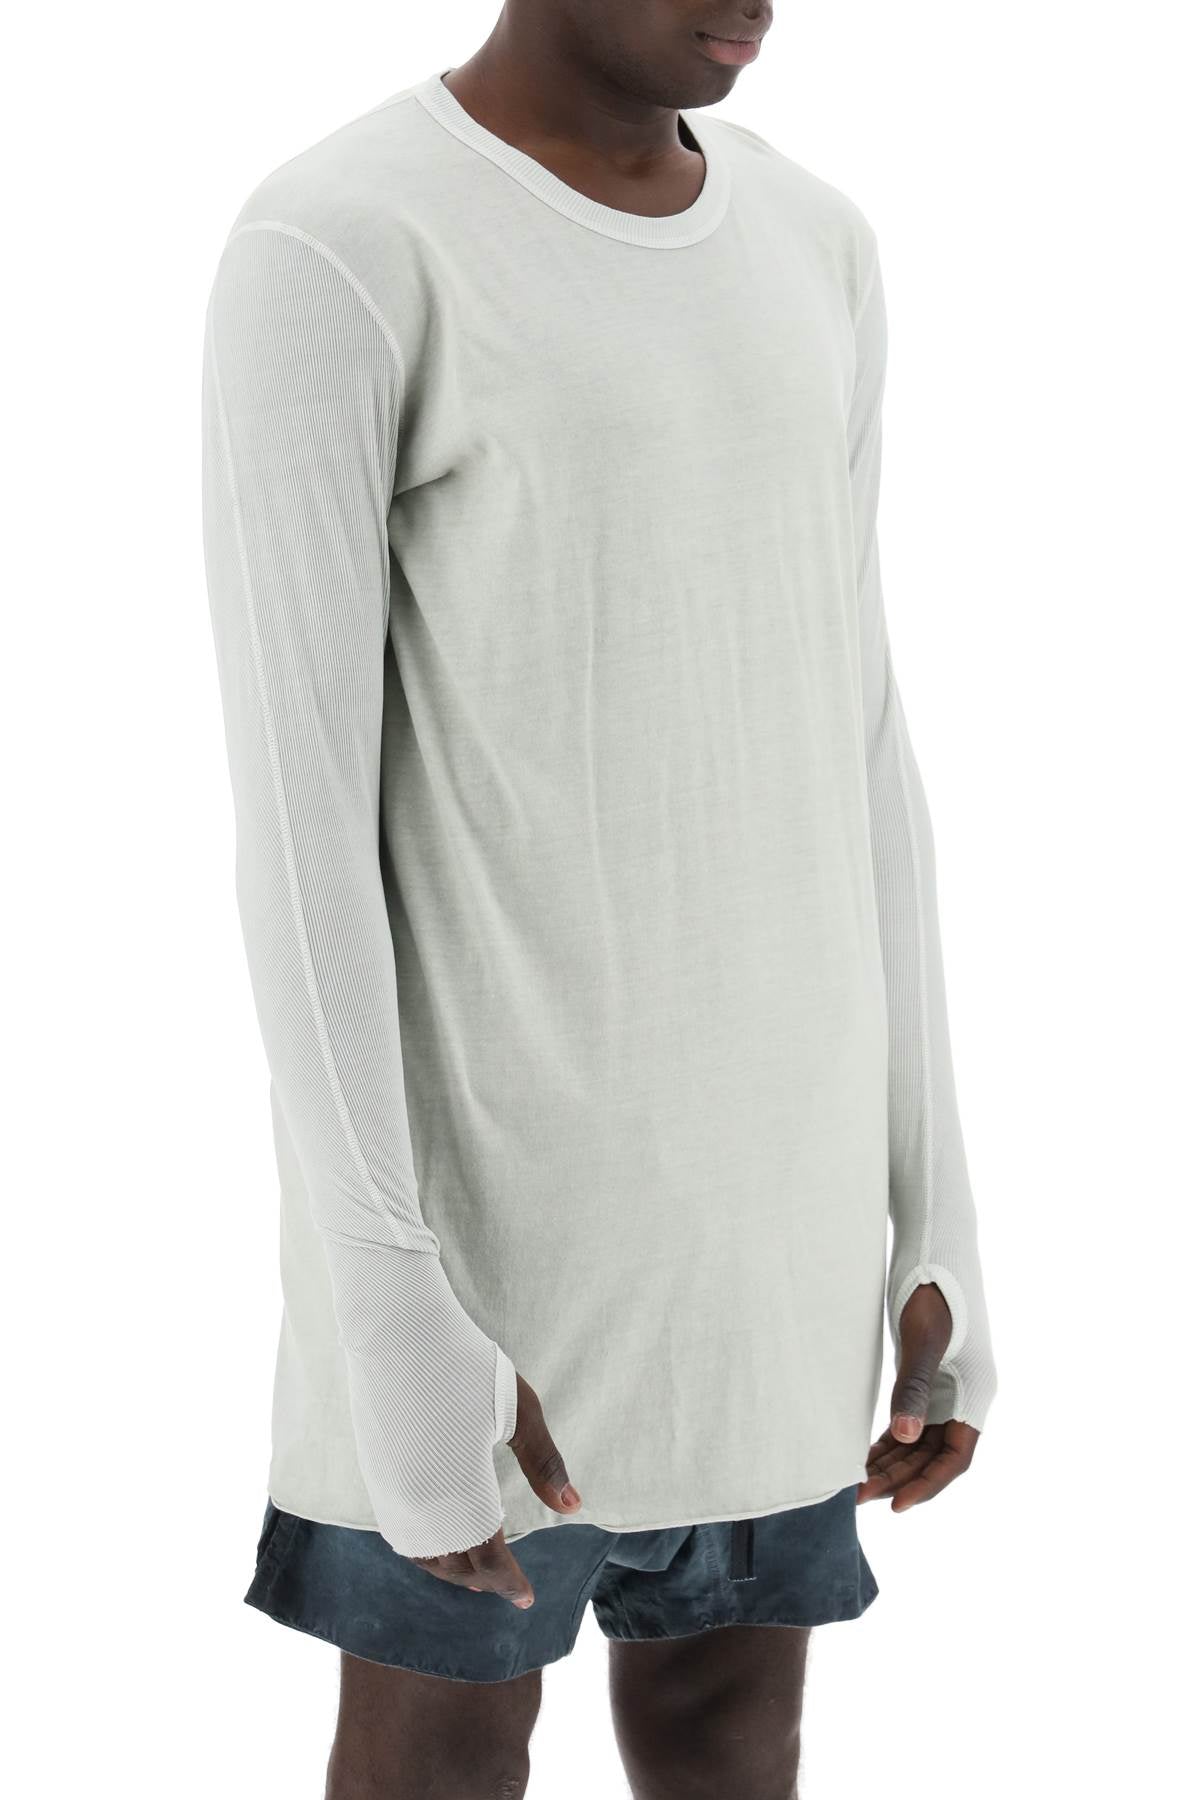 Boris bidjan saberi long-sleeved cotton t-shirt-1